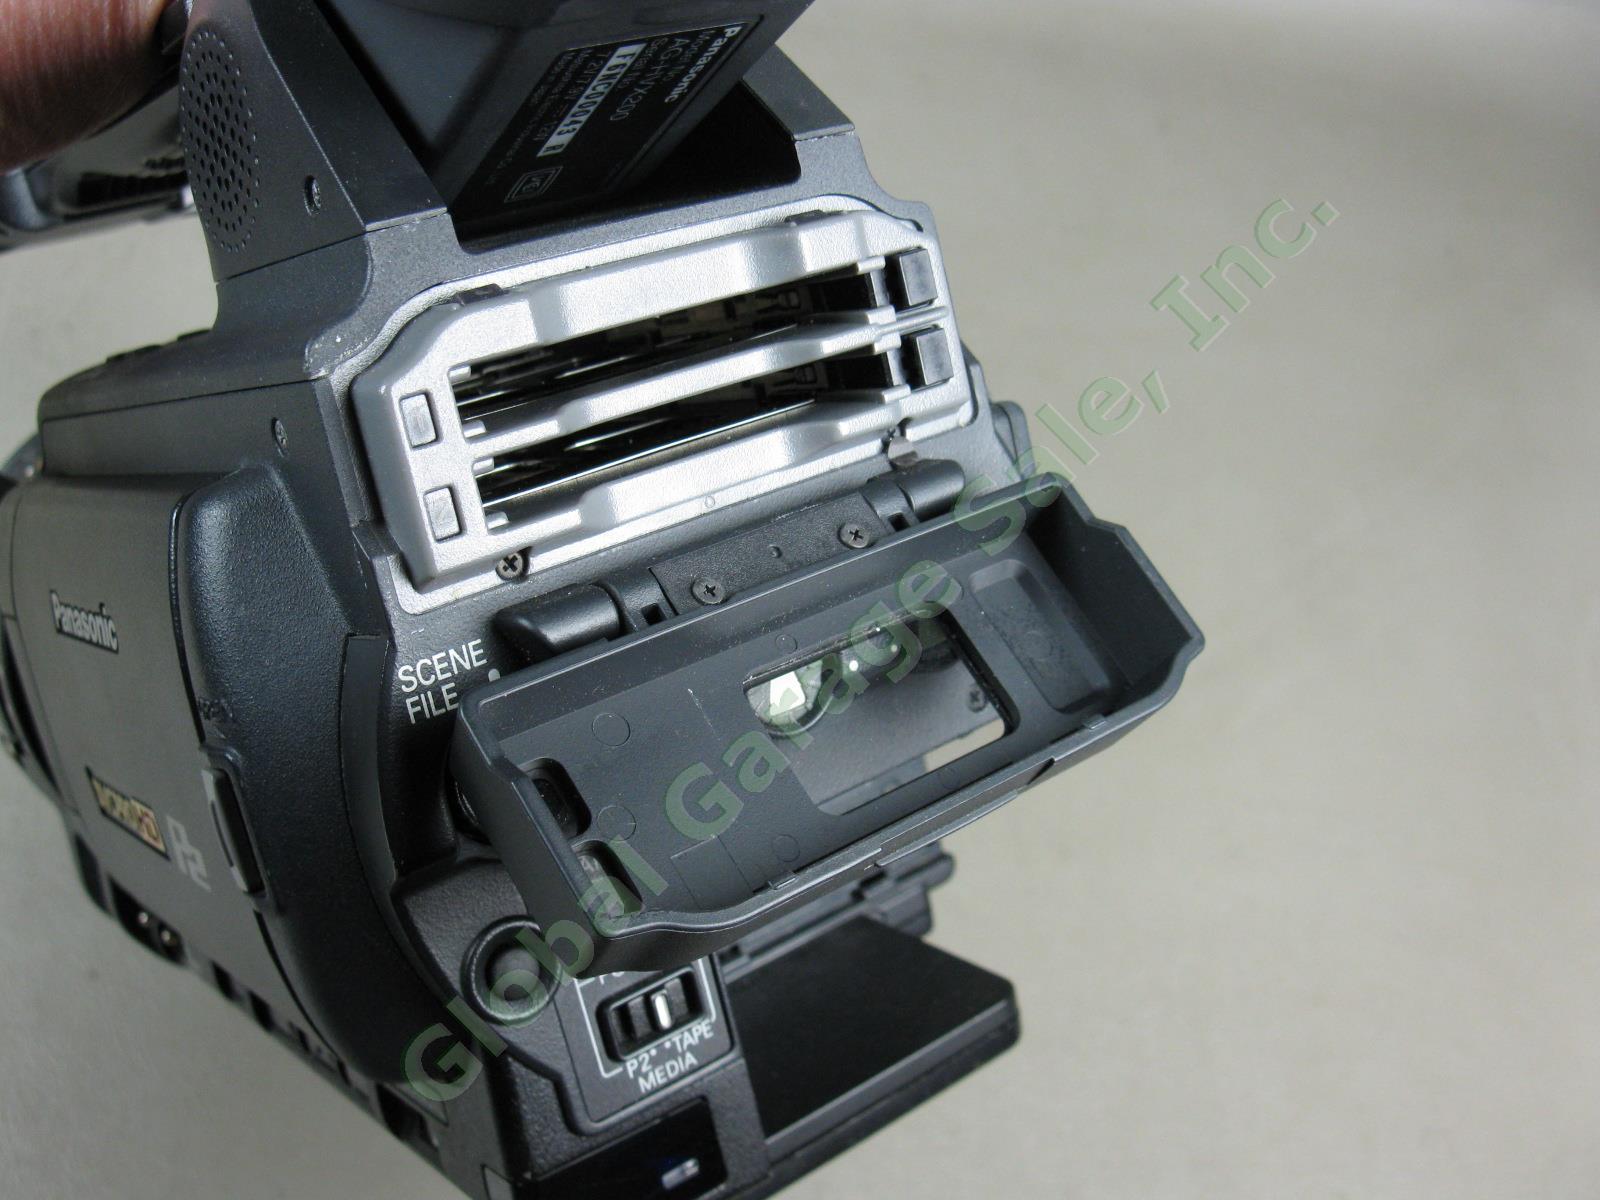 Panasonic AG-HVX200P DVCPRO 3CCD HD P2 MiniDV Pro Camcorder Video Camera Bundle 9